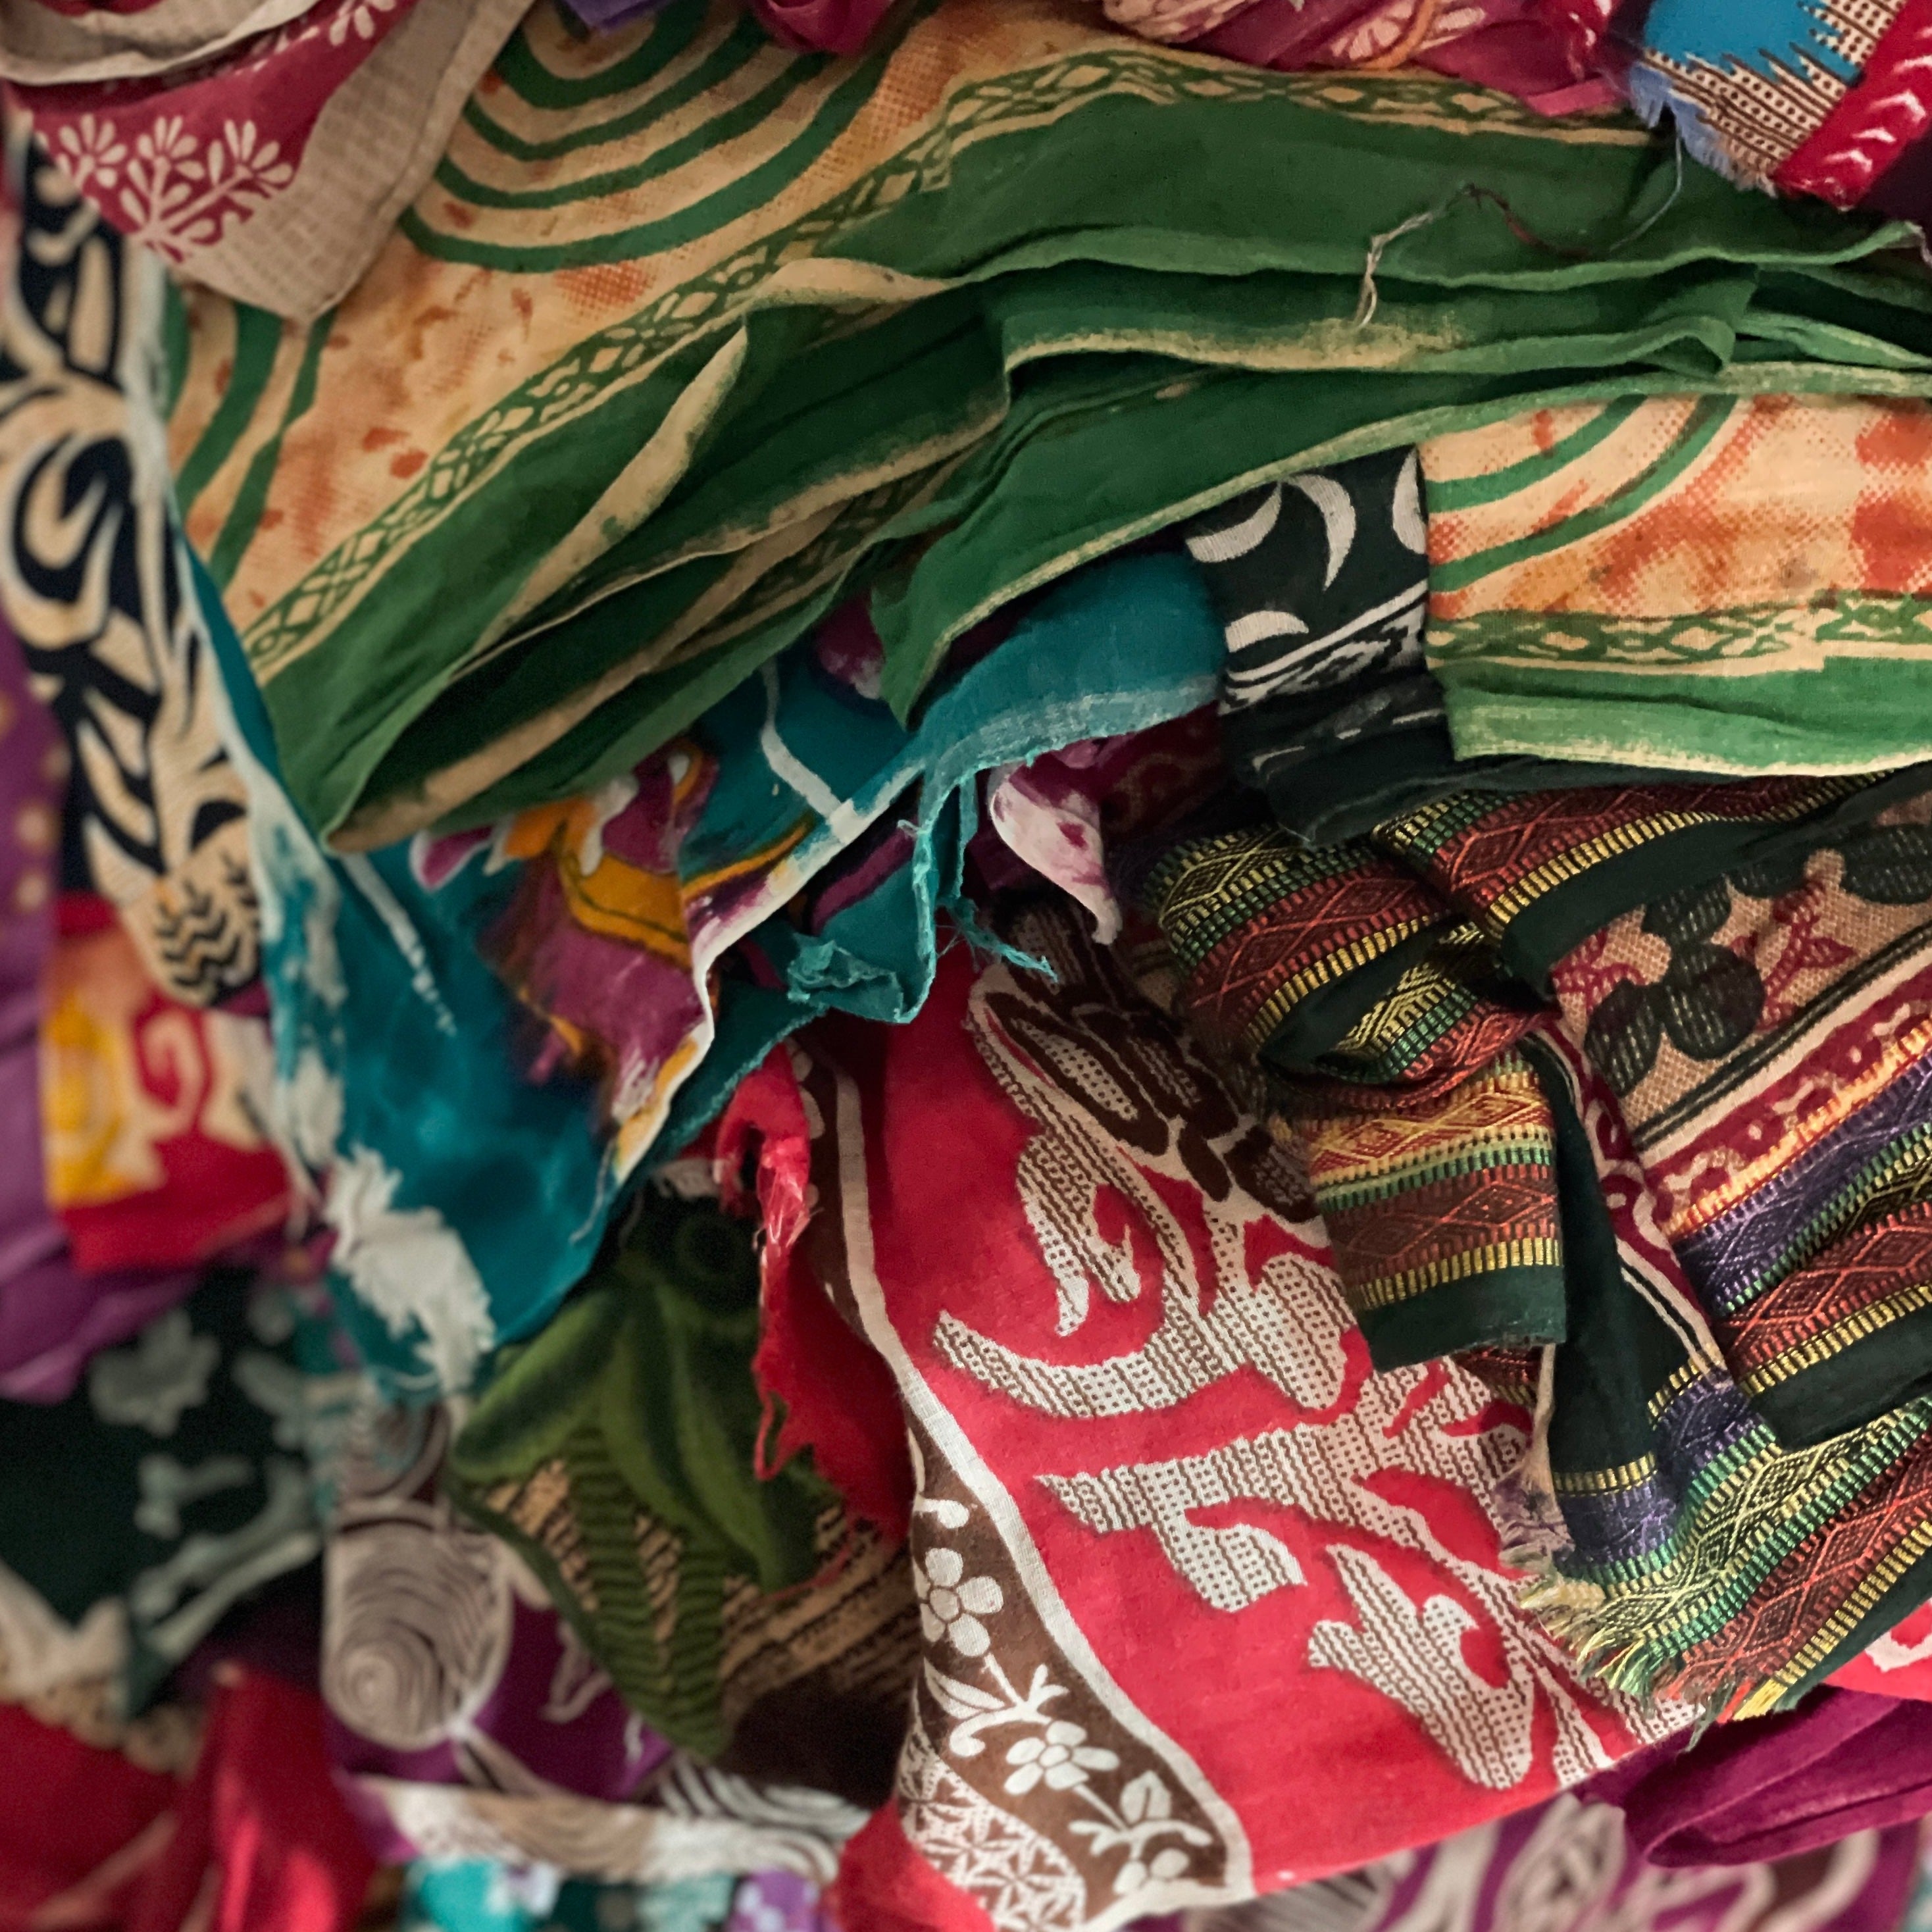 Recycled saris, Bangladesh